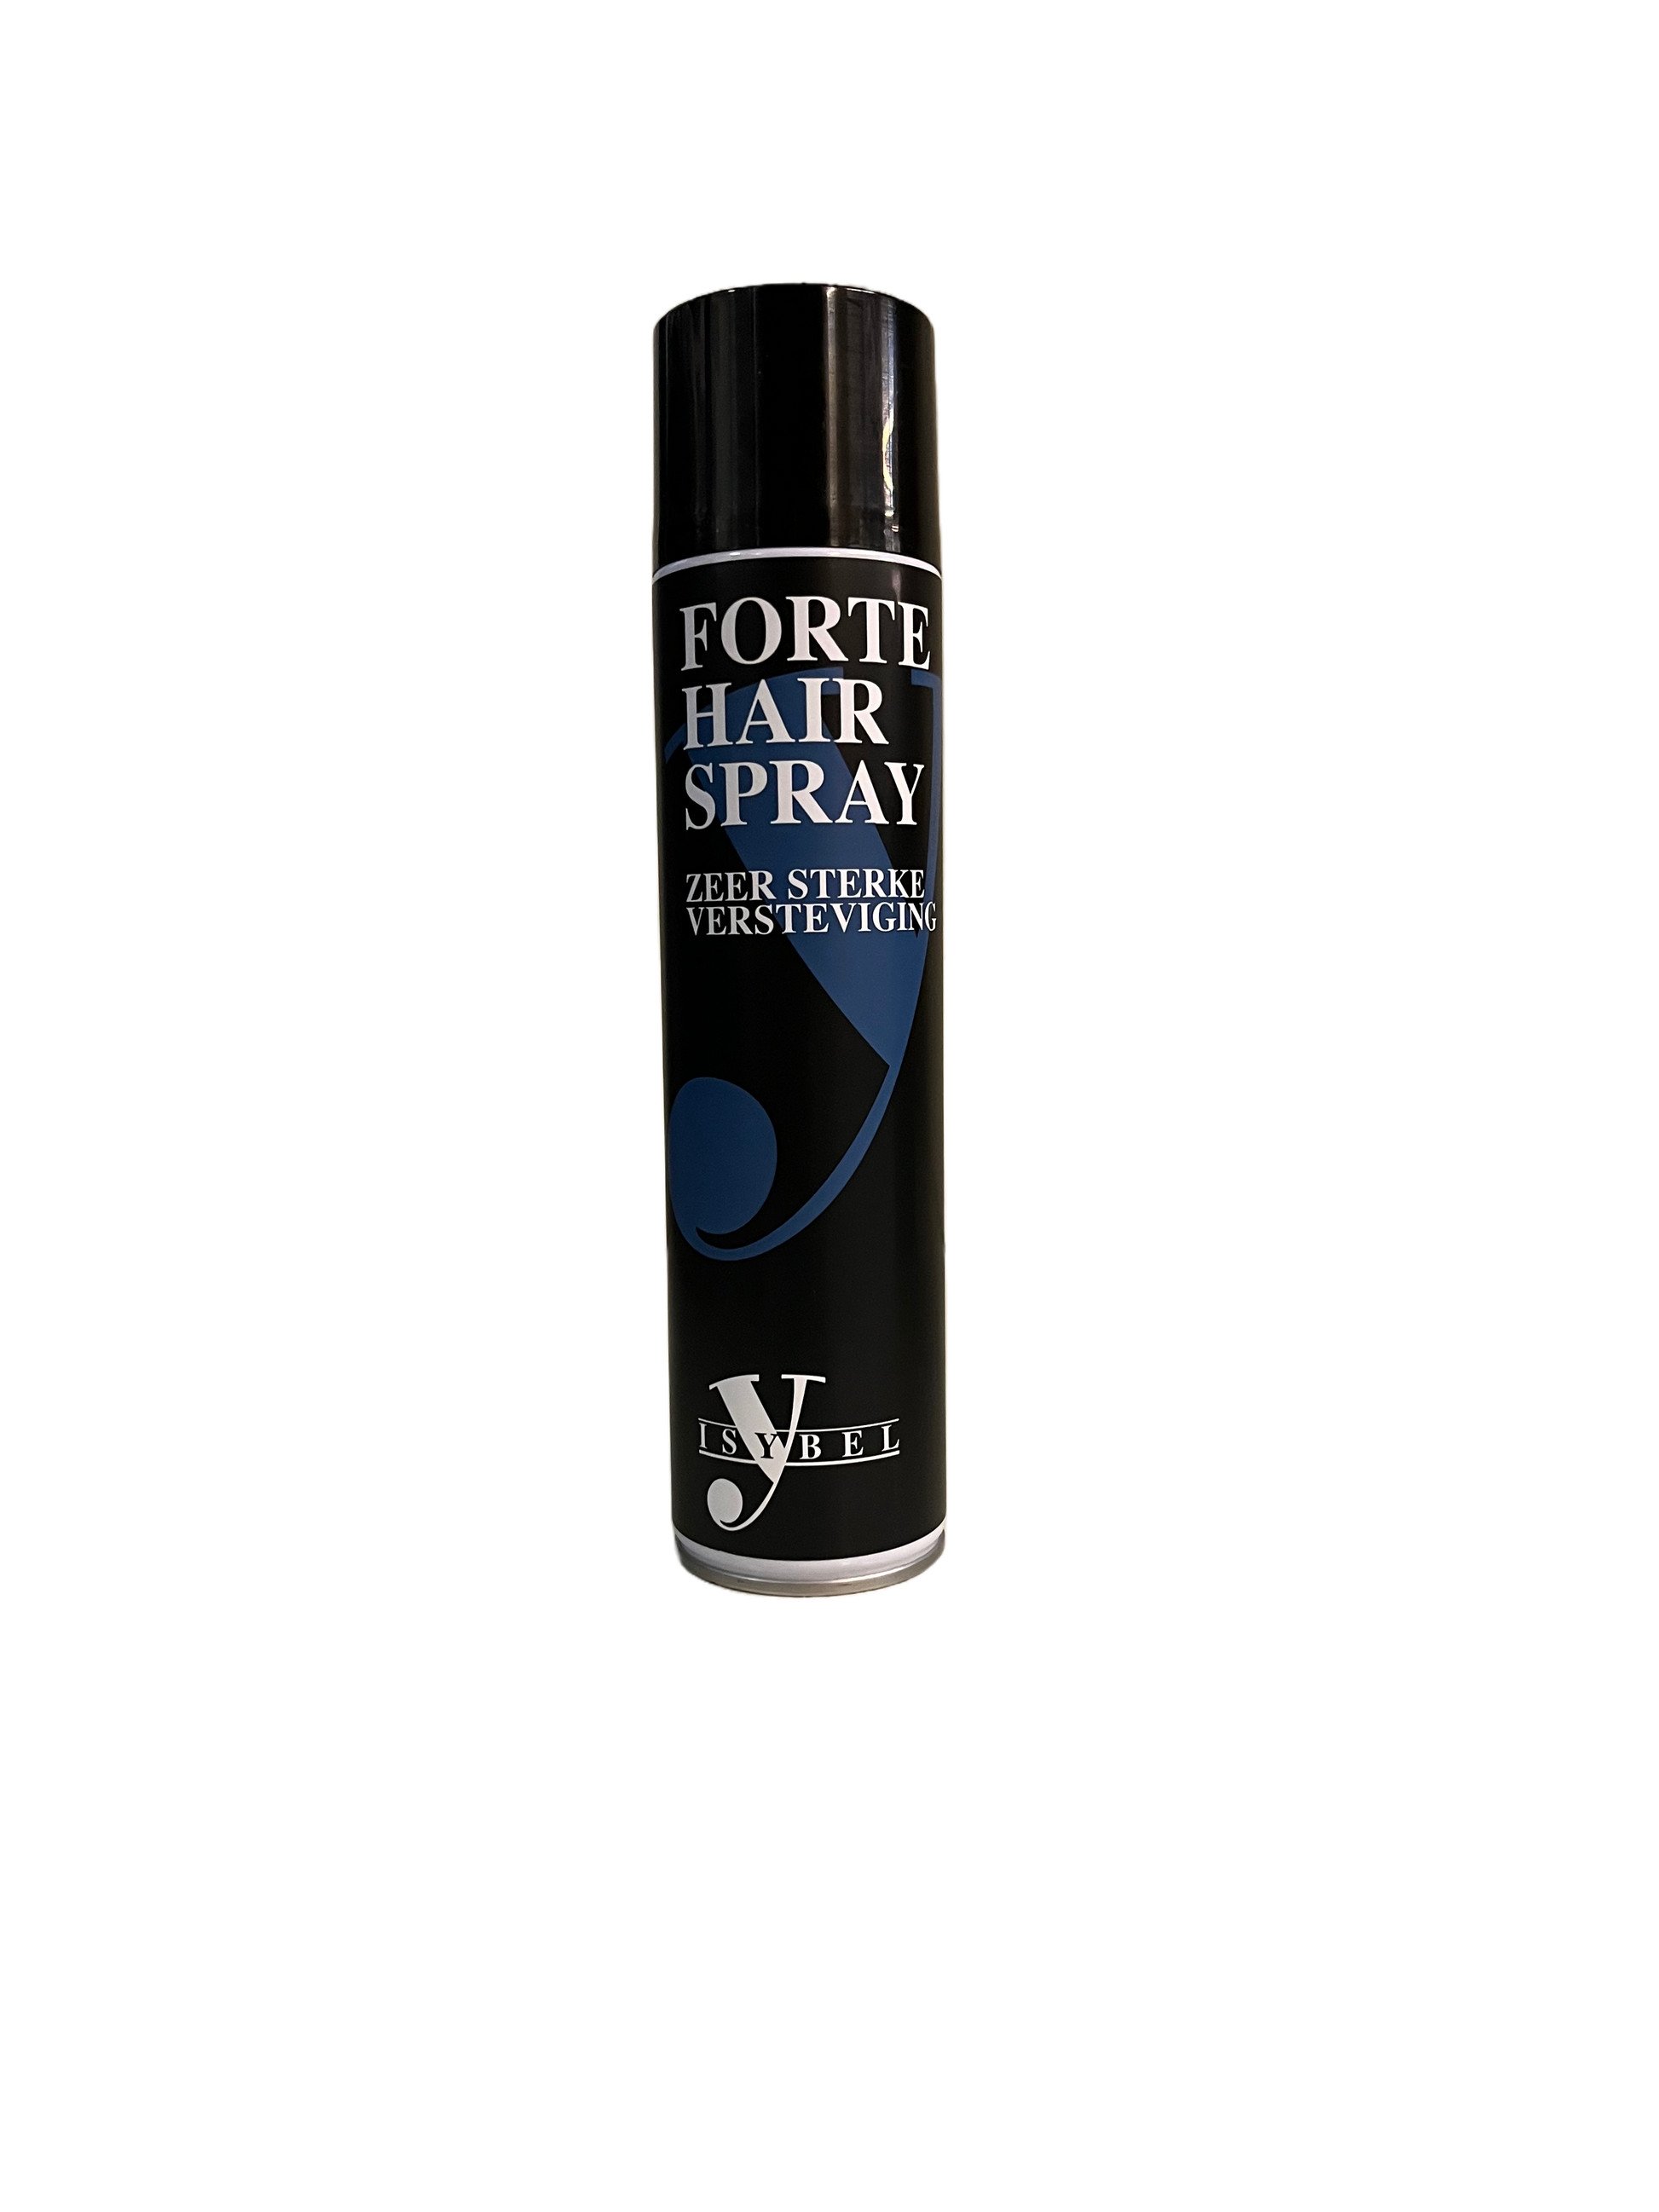 Isybel Hair Lak Spray 400ml - Parfumerietwiggy